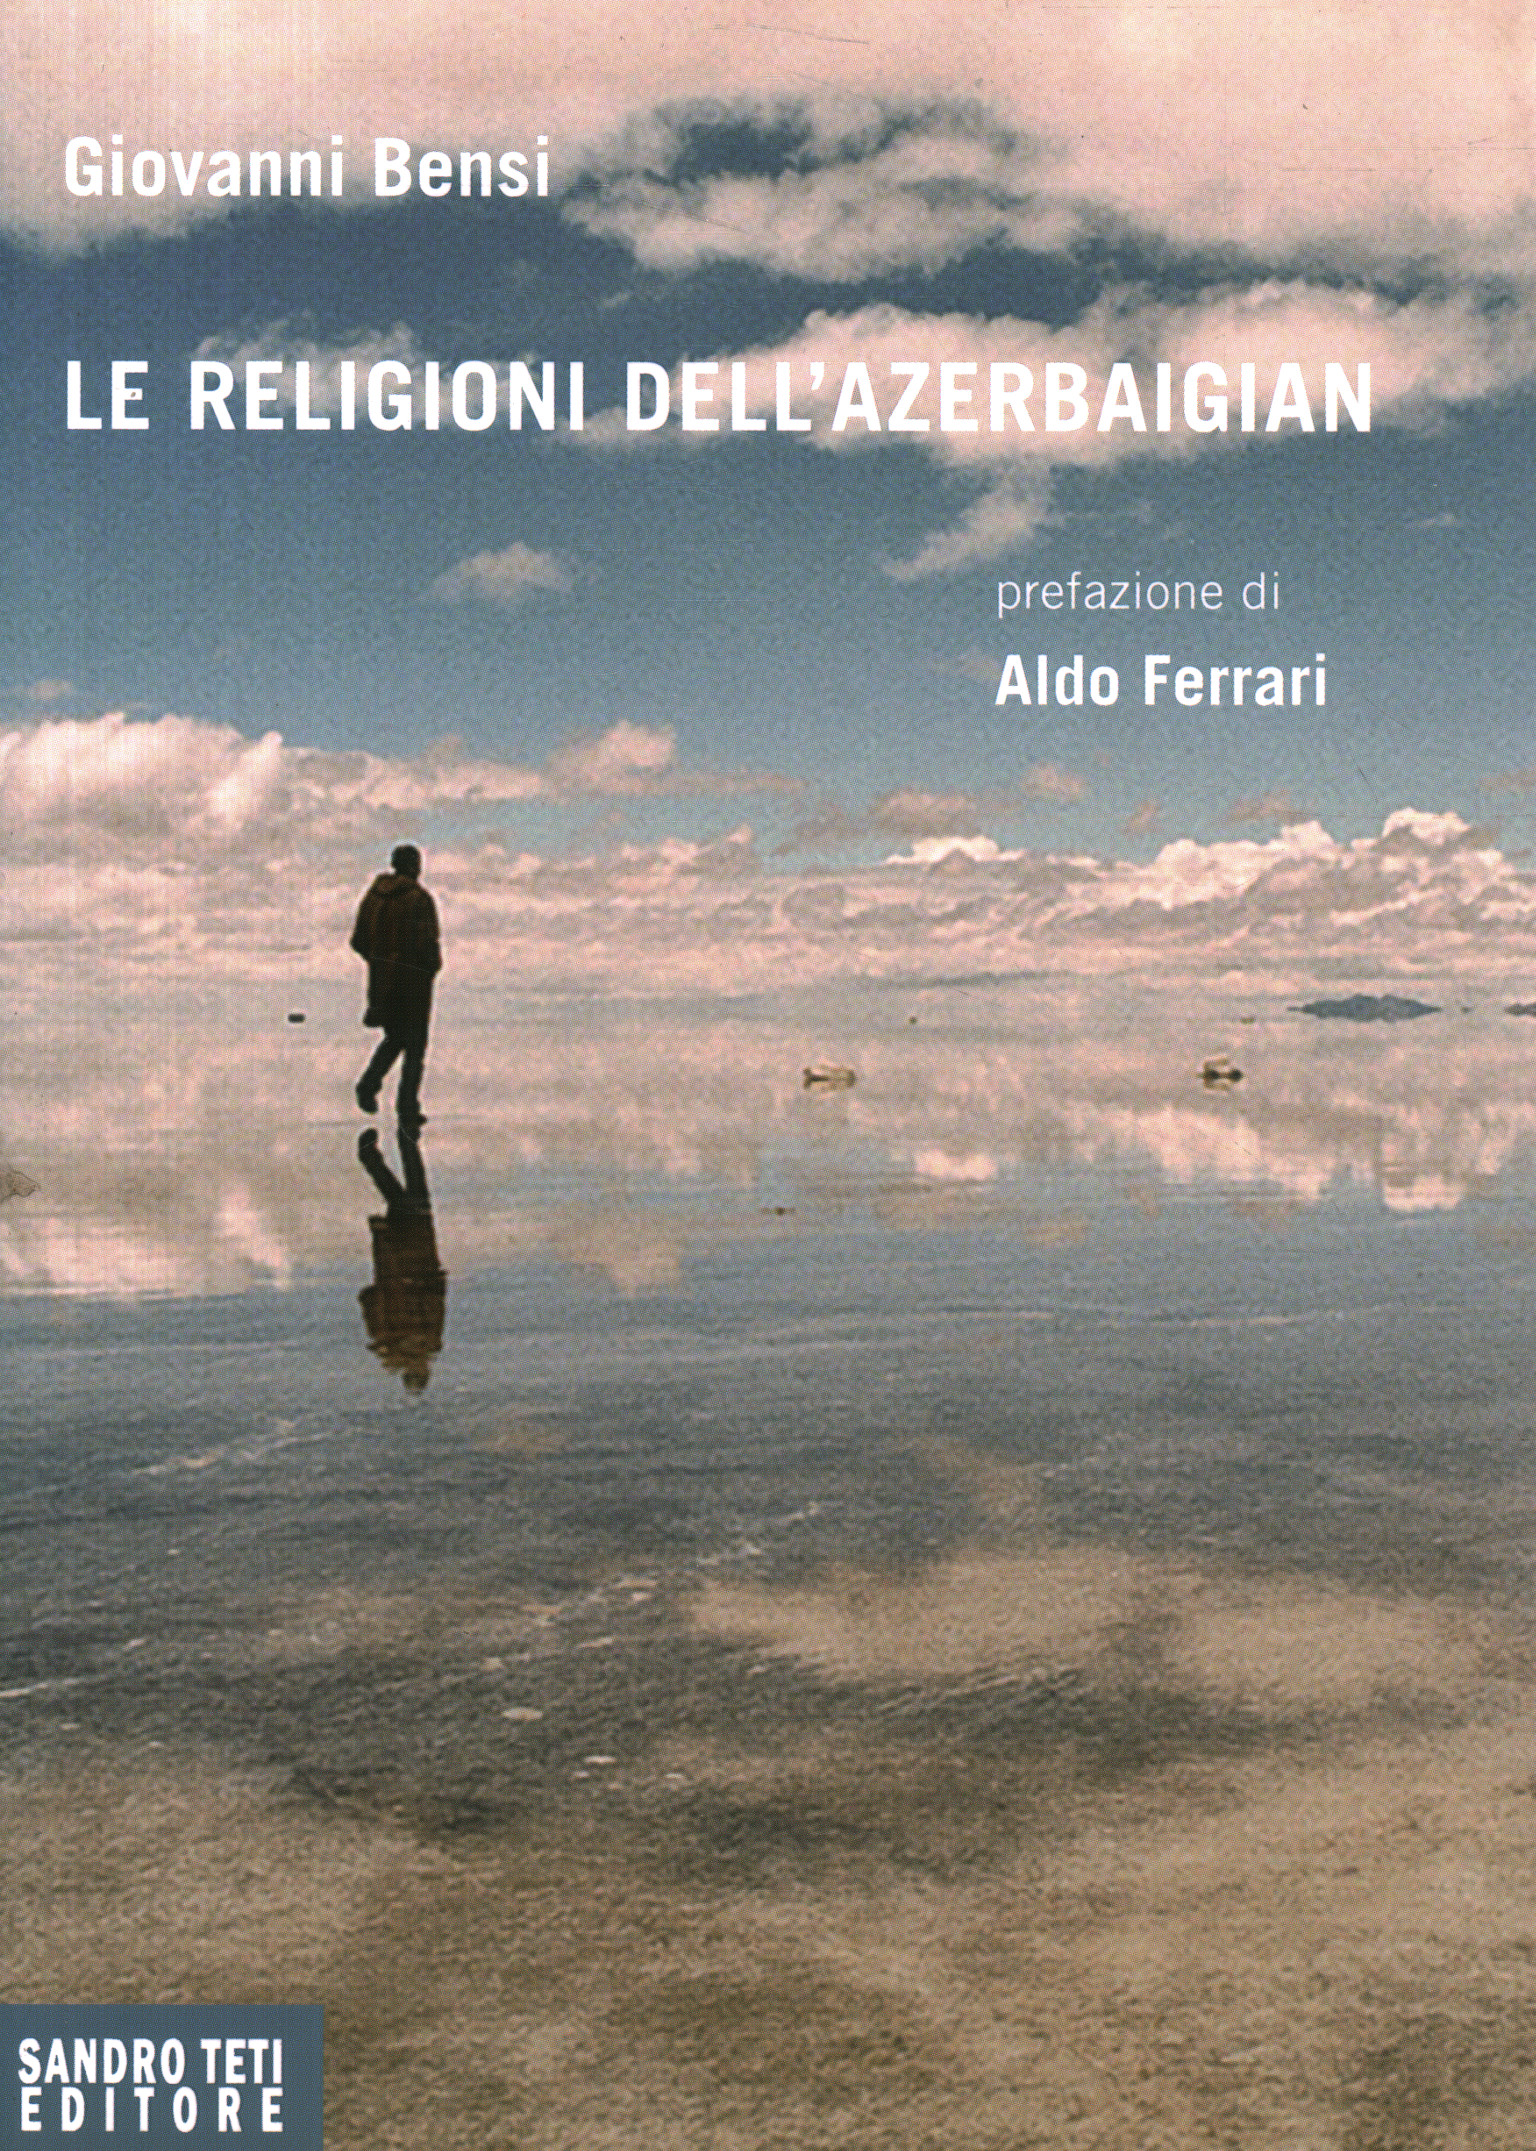 Books - Religion - History of religion,Azerbaijan's religions